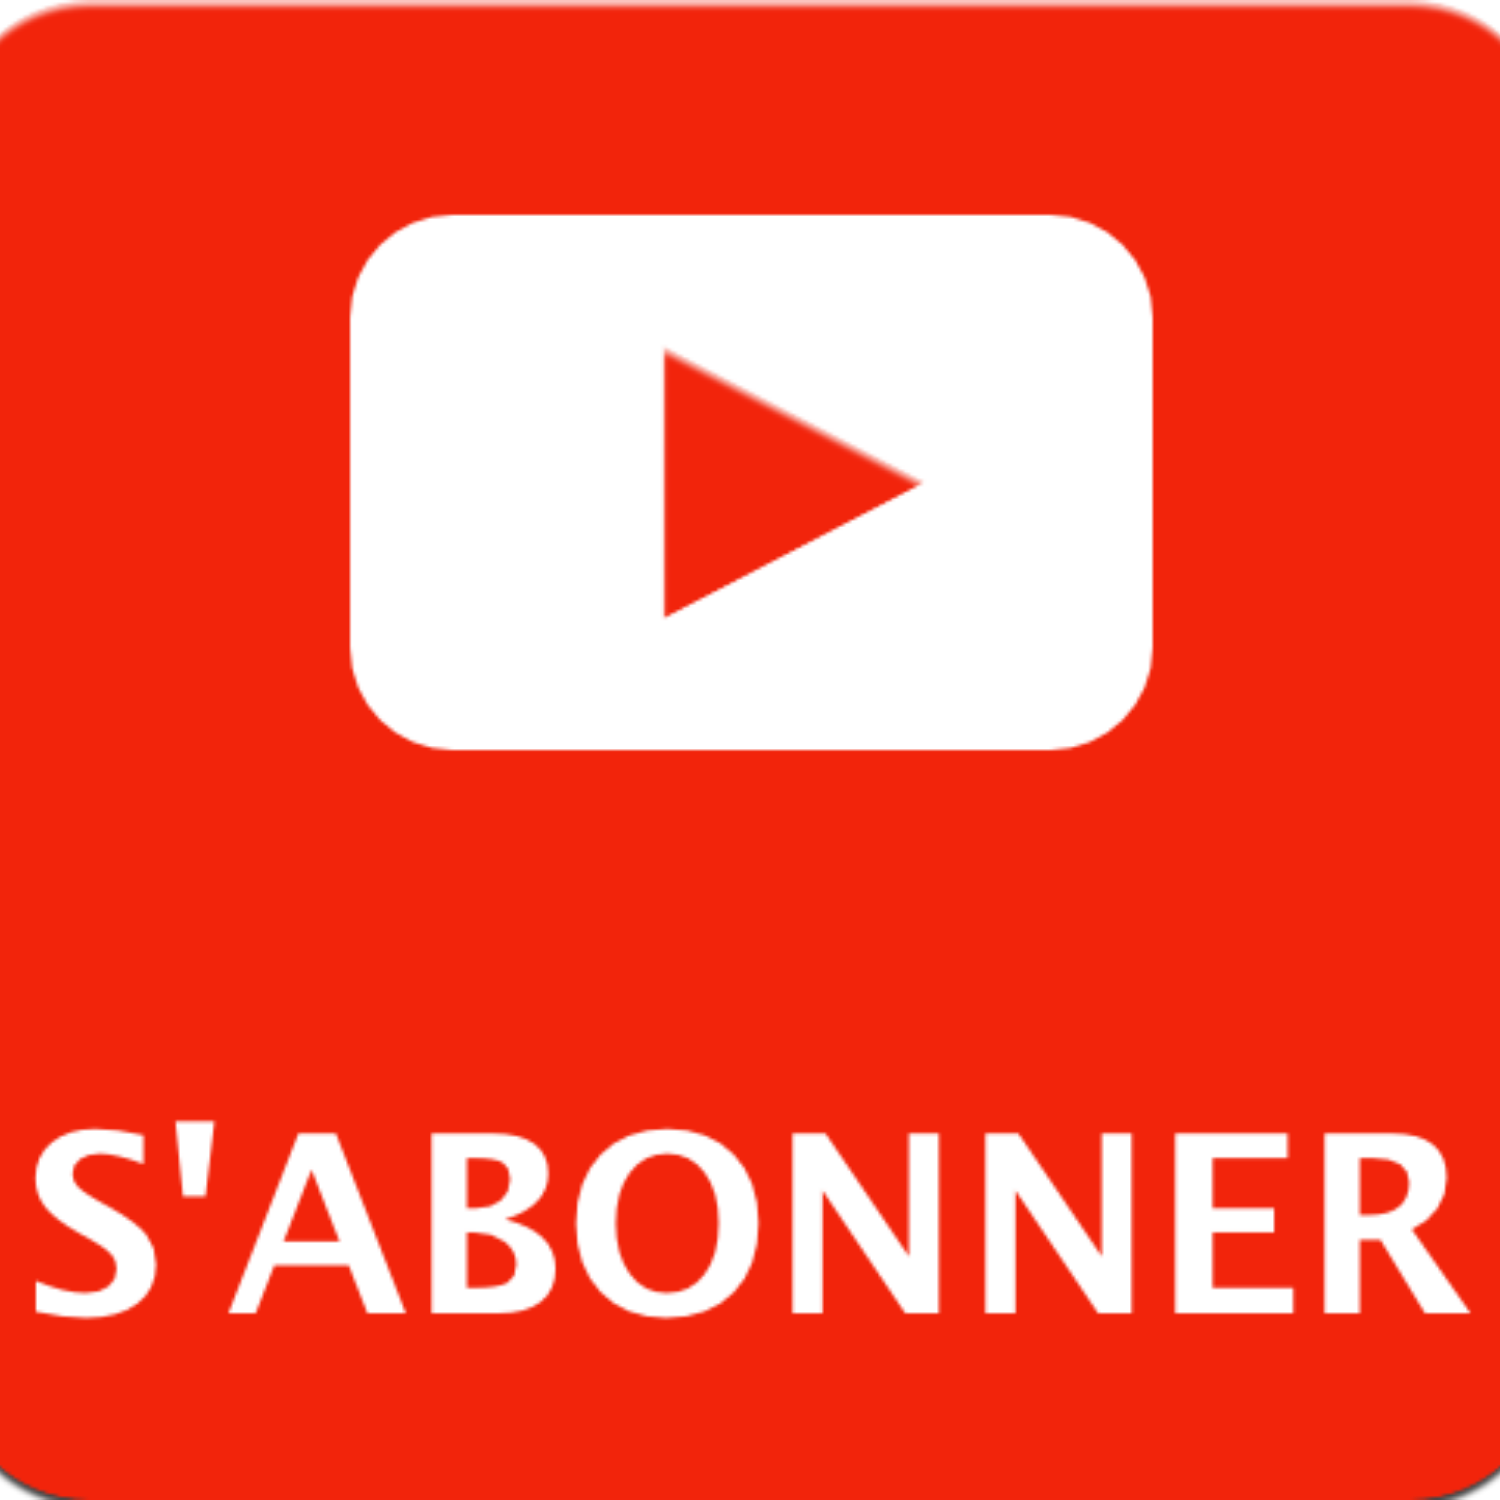 Youtube Marion Le Troquer